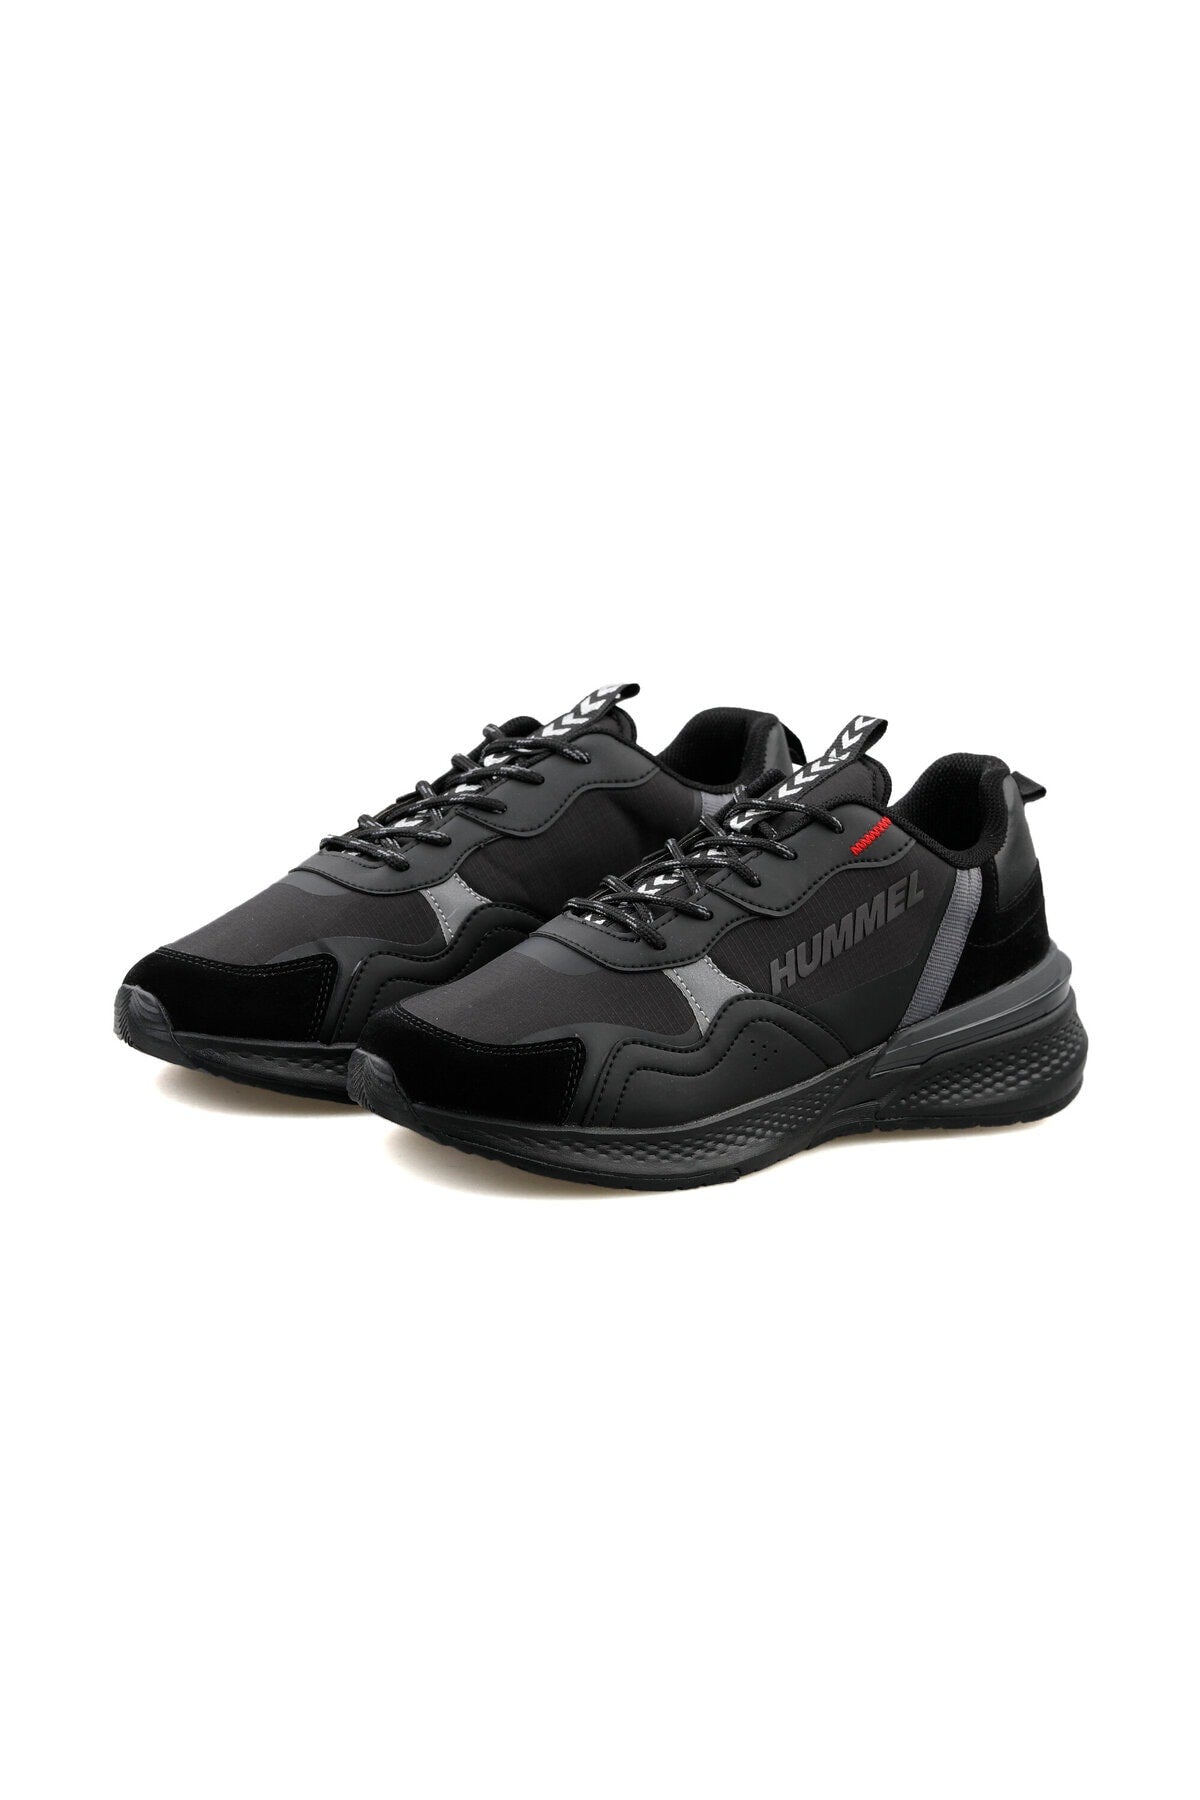 Joker Men's Casual Shoes 900316-3081 Black